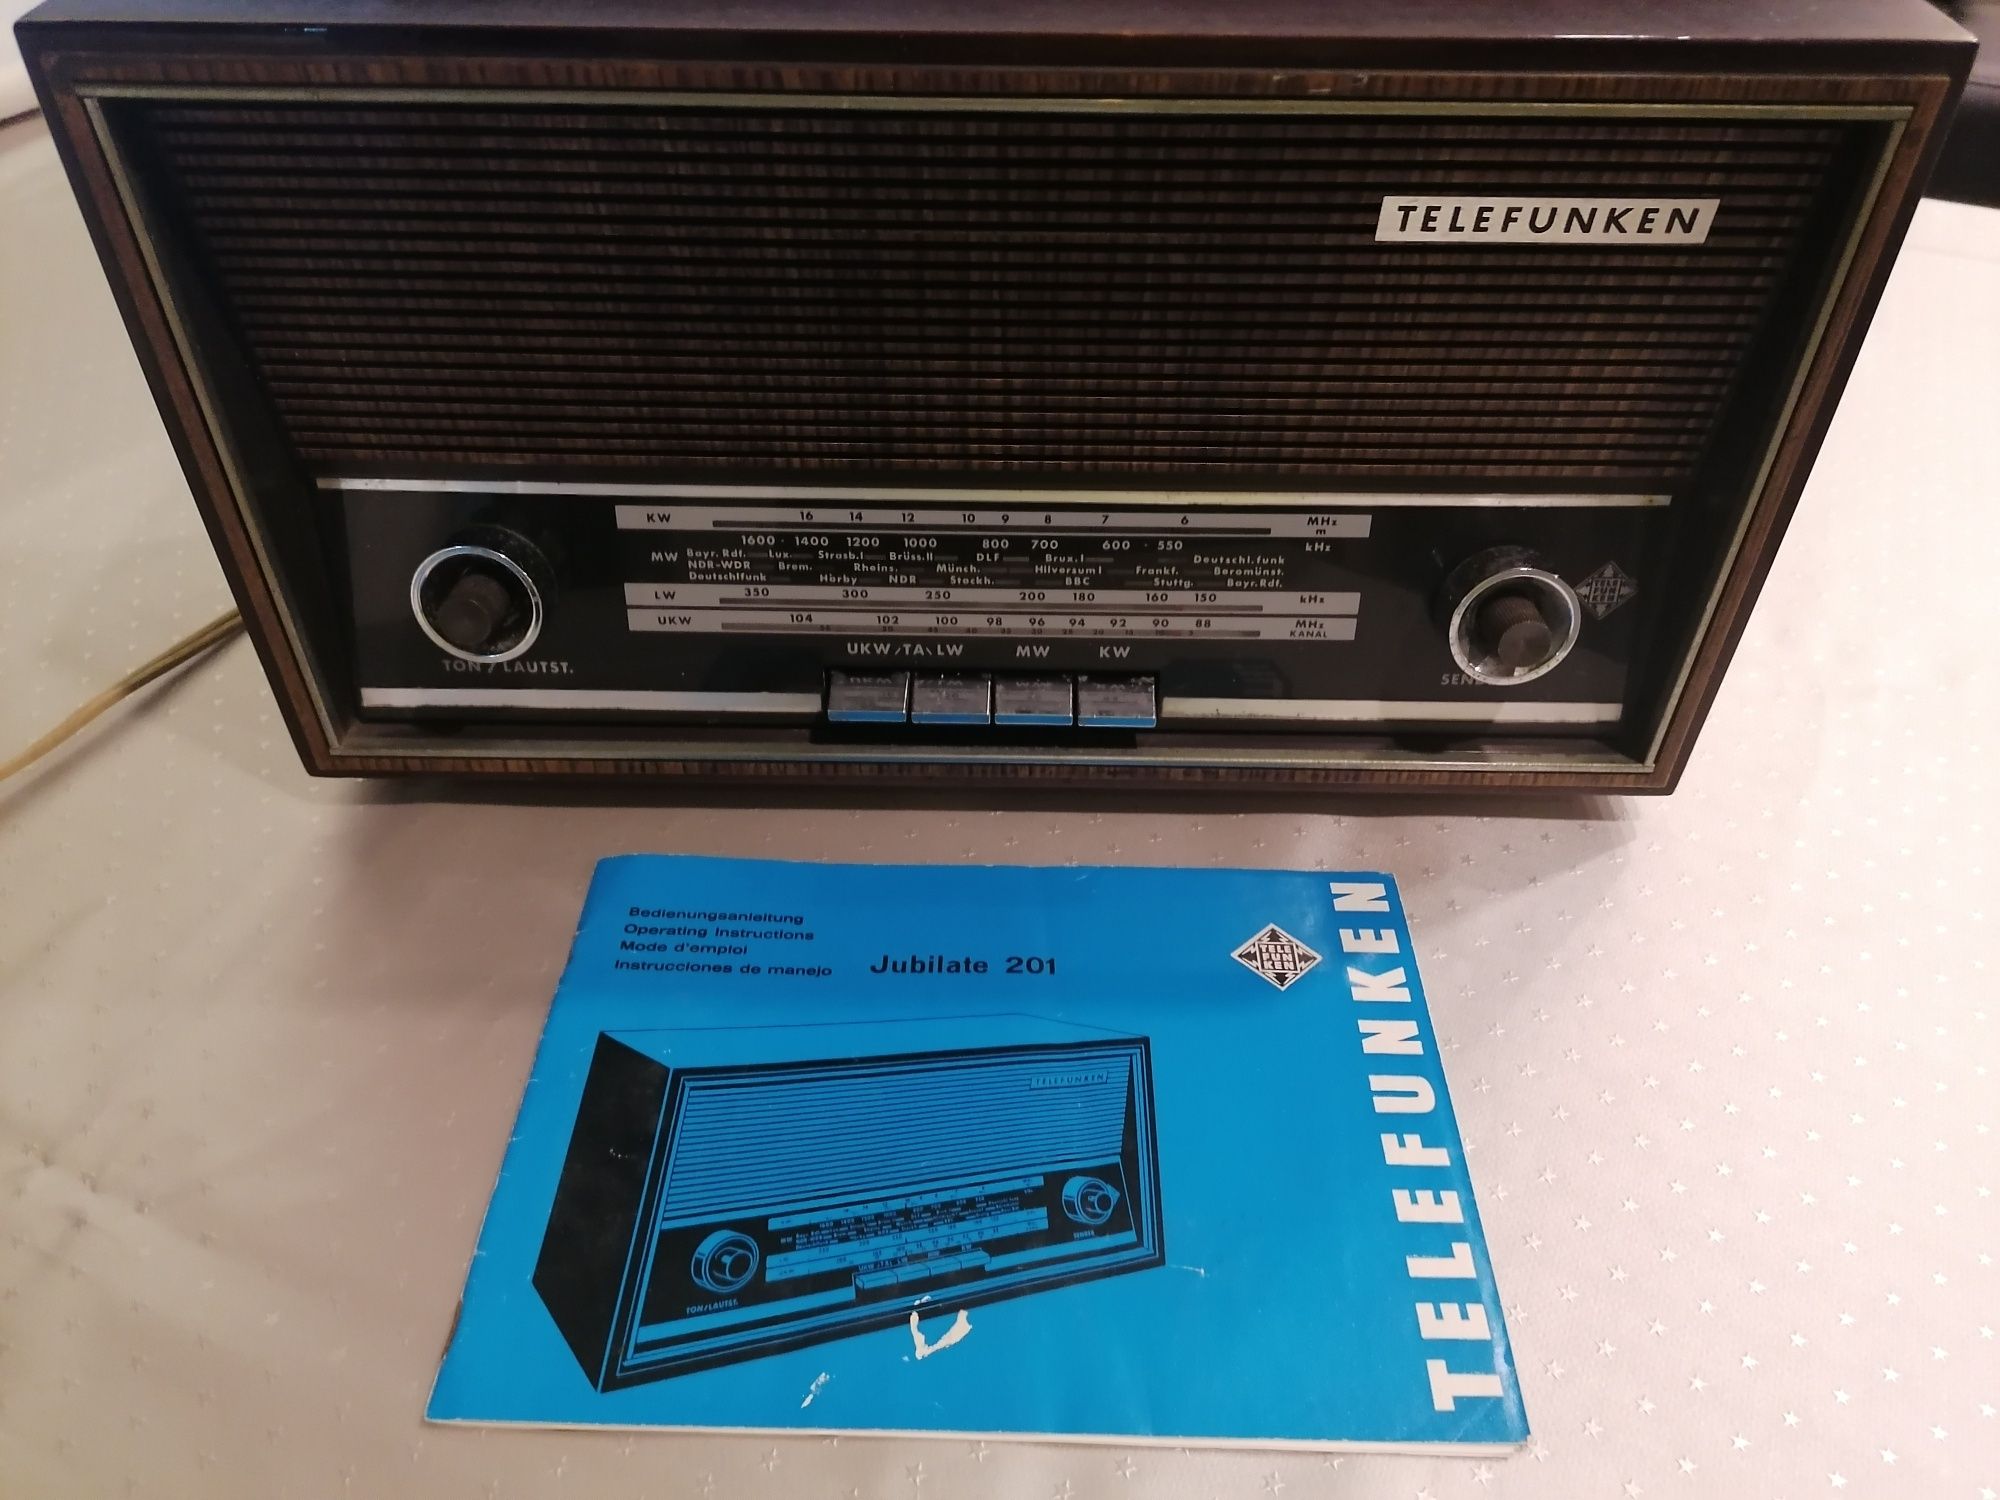 Rádio Telefunken Jubilate 201 - vintage - 1967